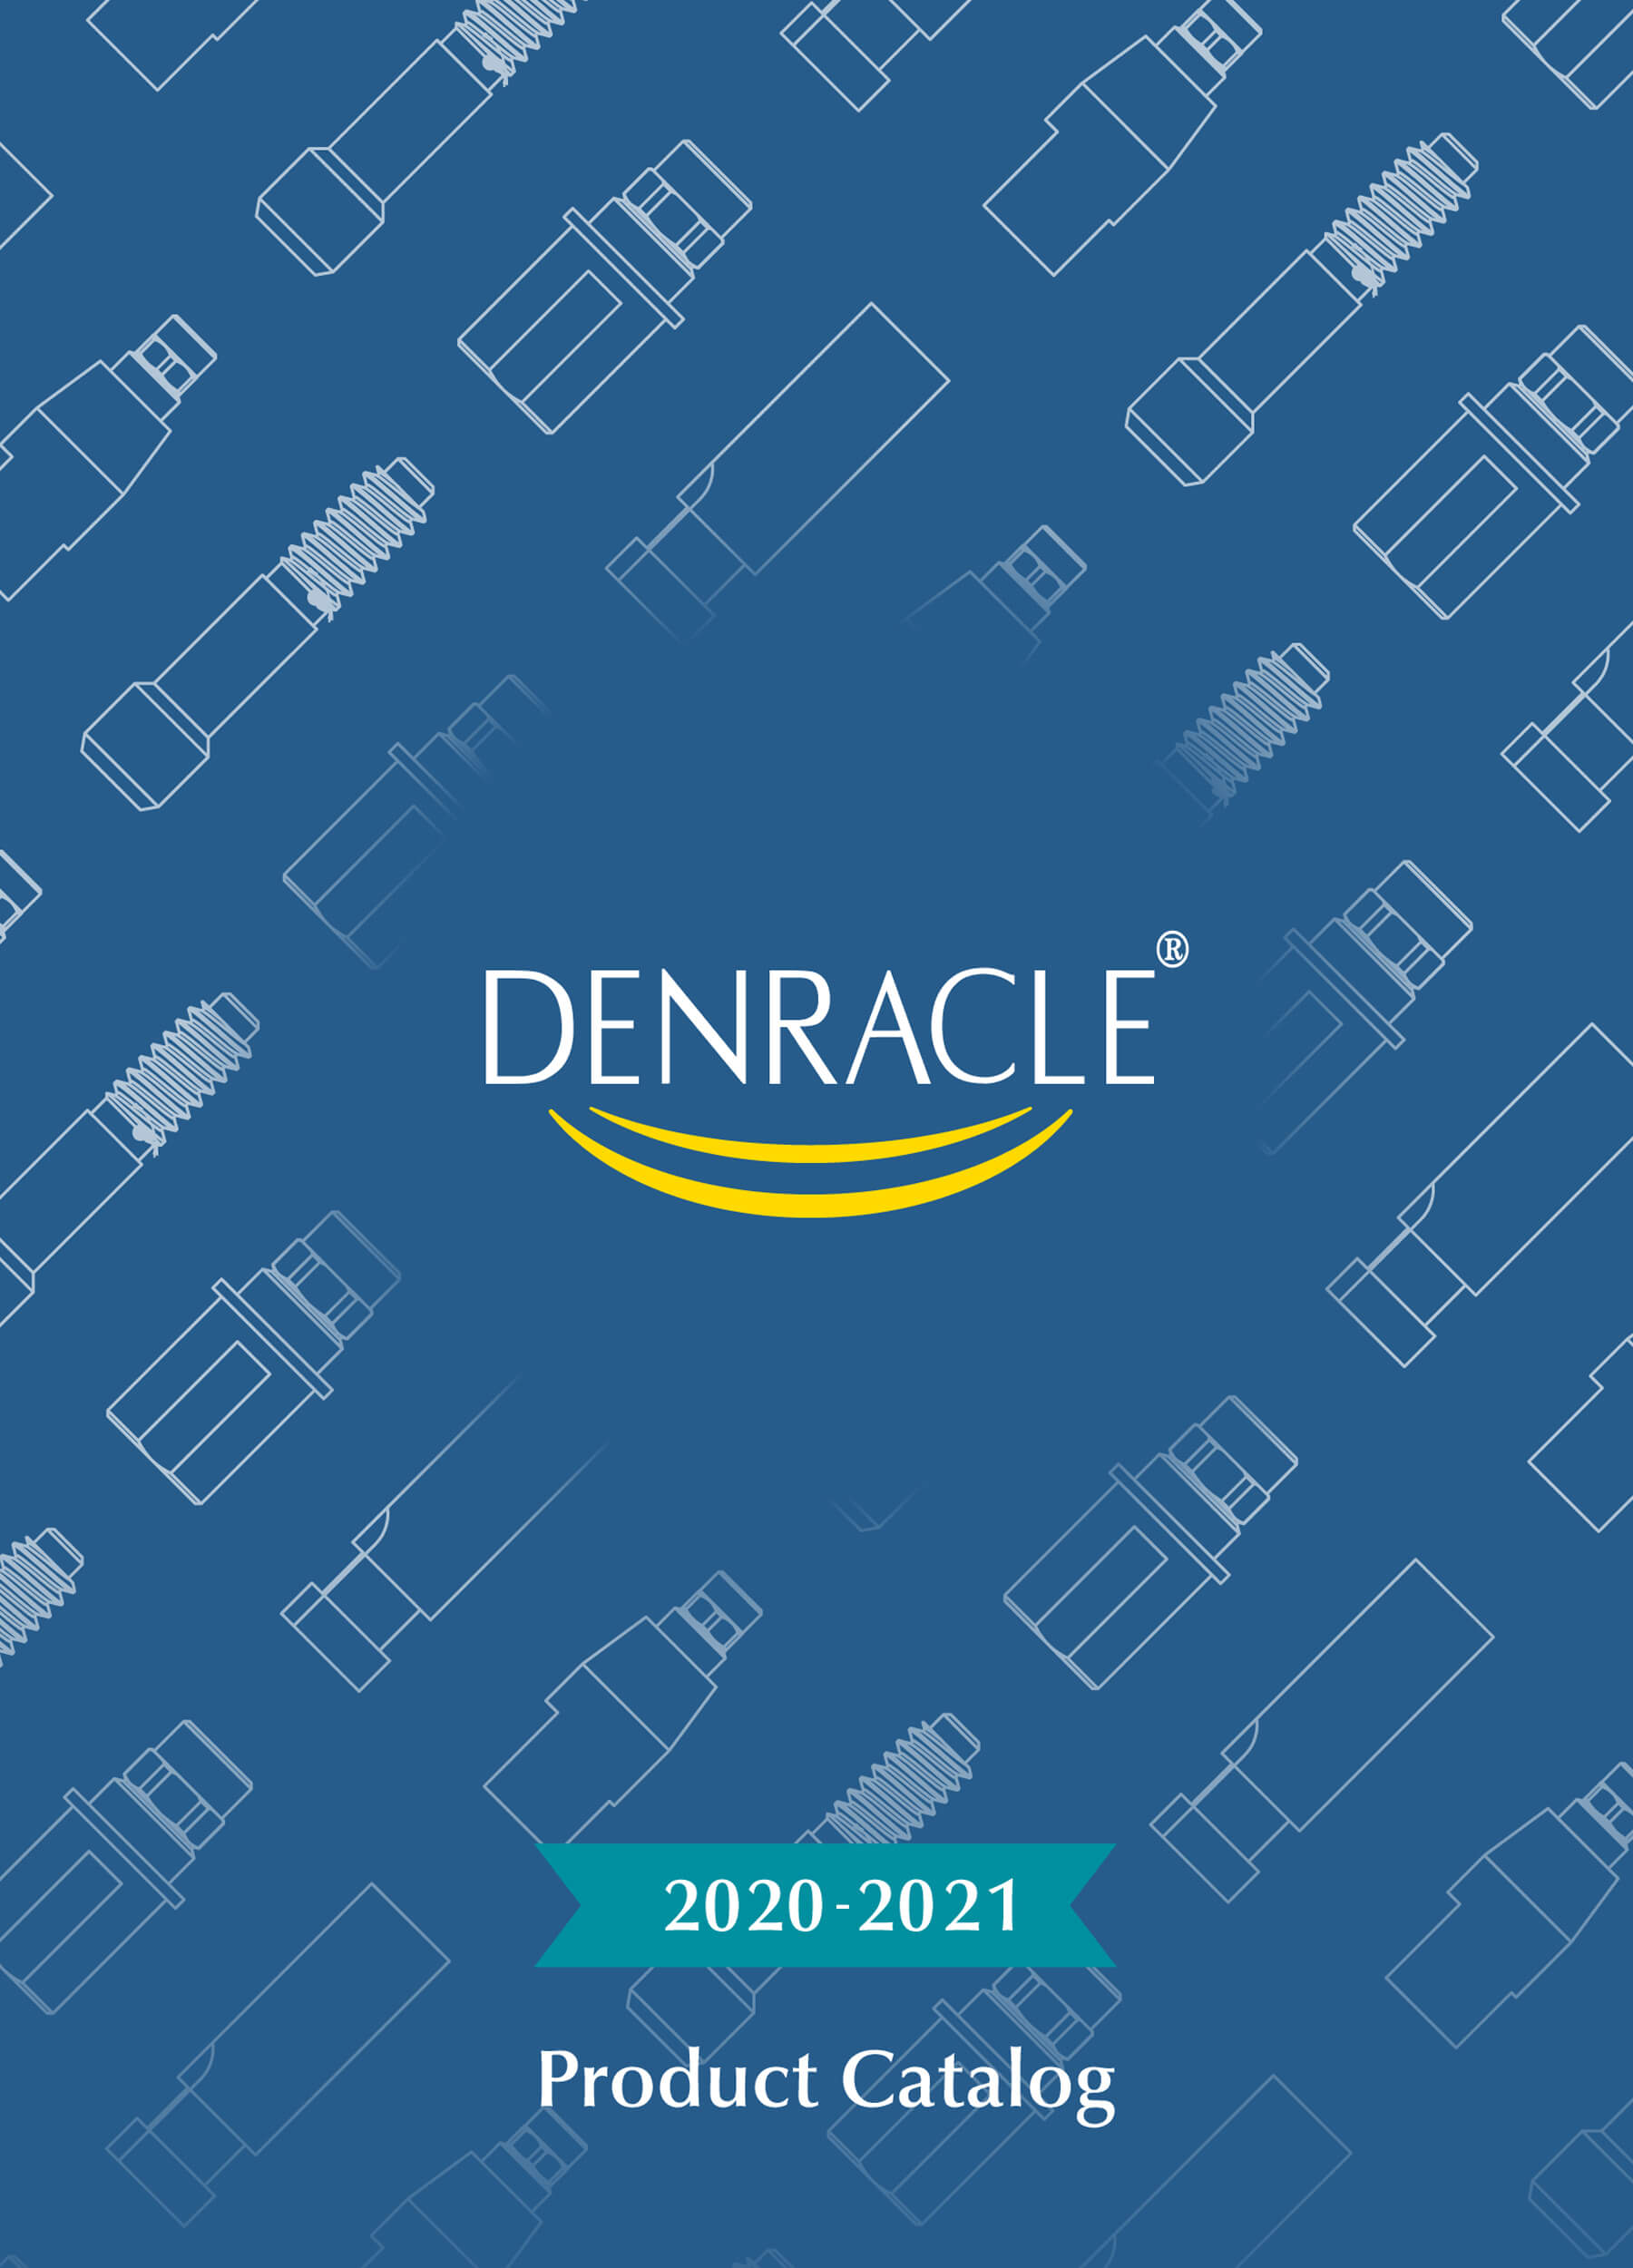 DENRACLE Product Catalog_2020-2021